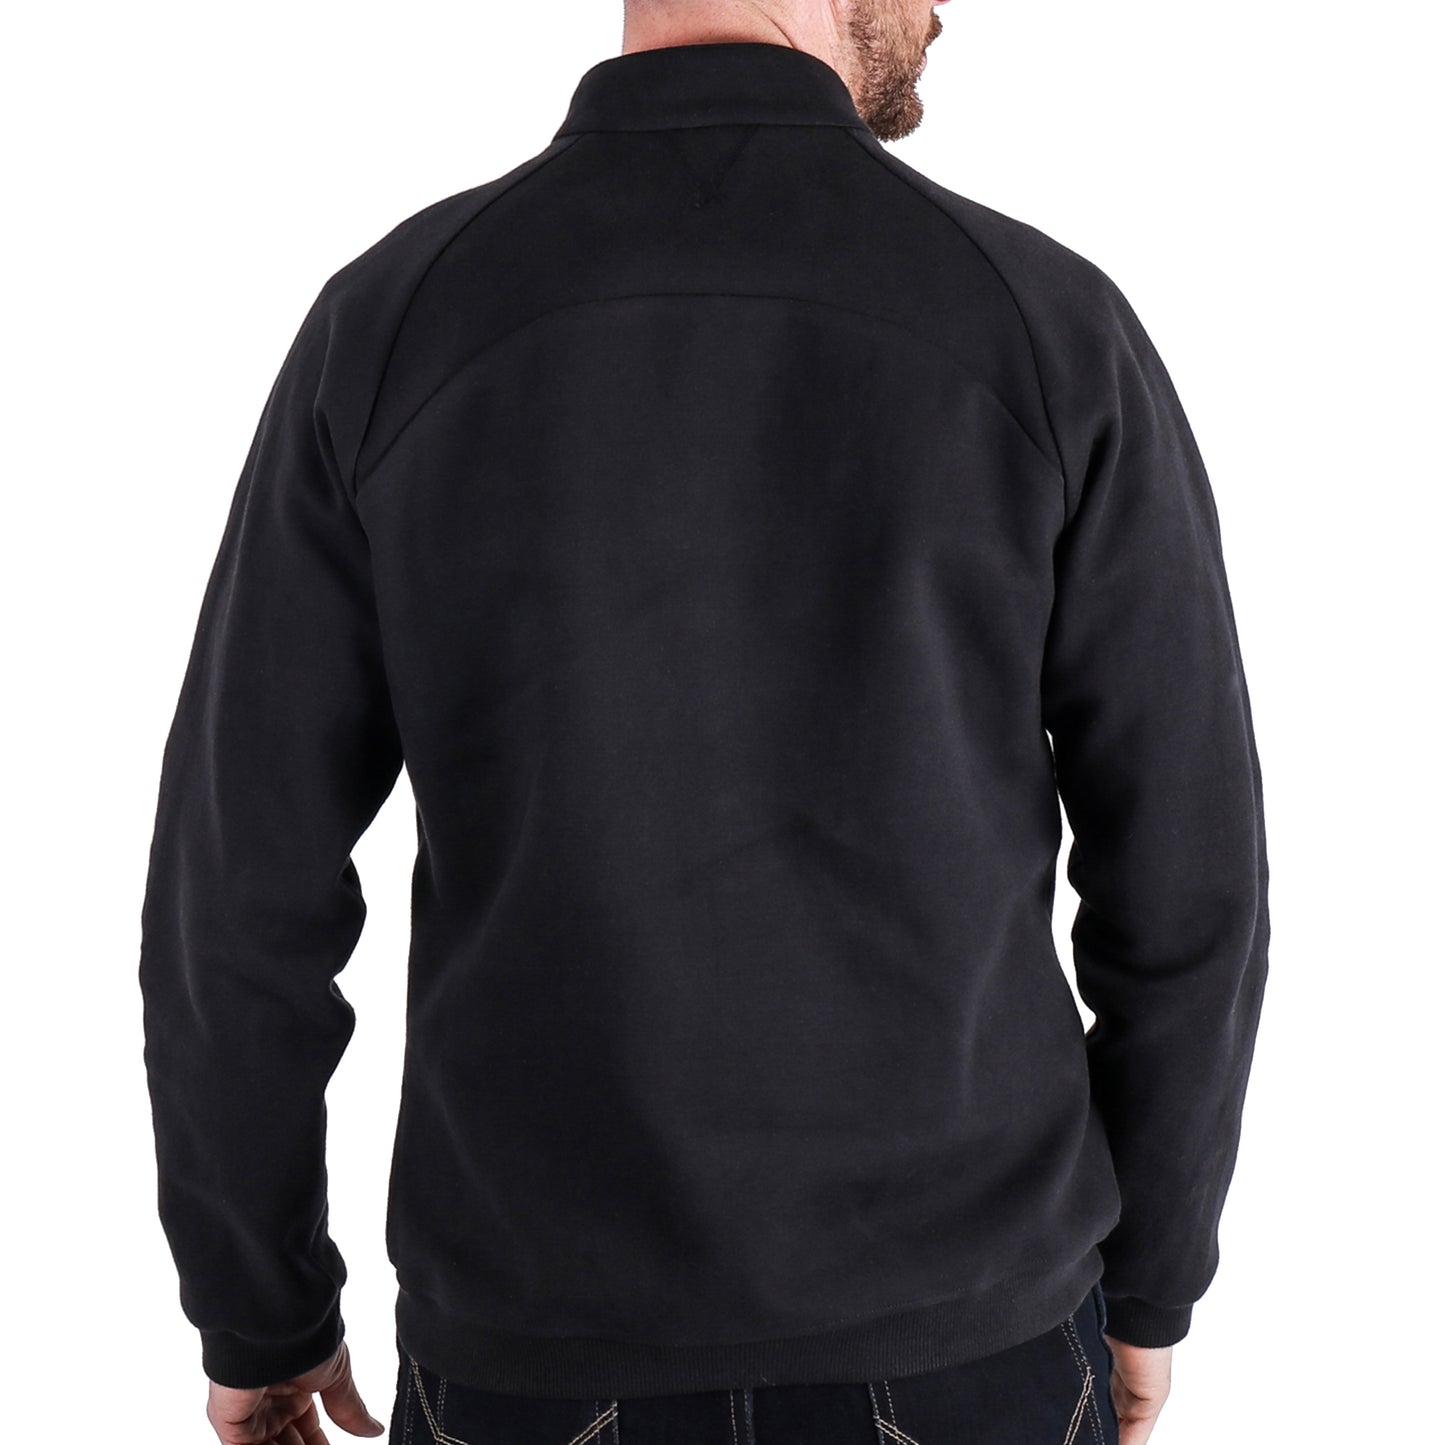 Knox Shield Half-Zip Sweat Shirt Made With Spectra - Black